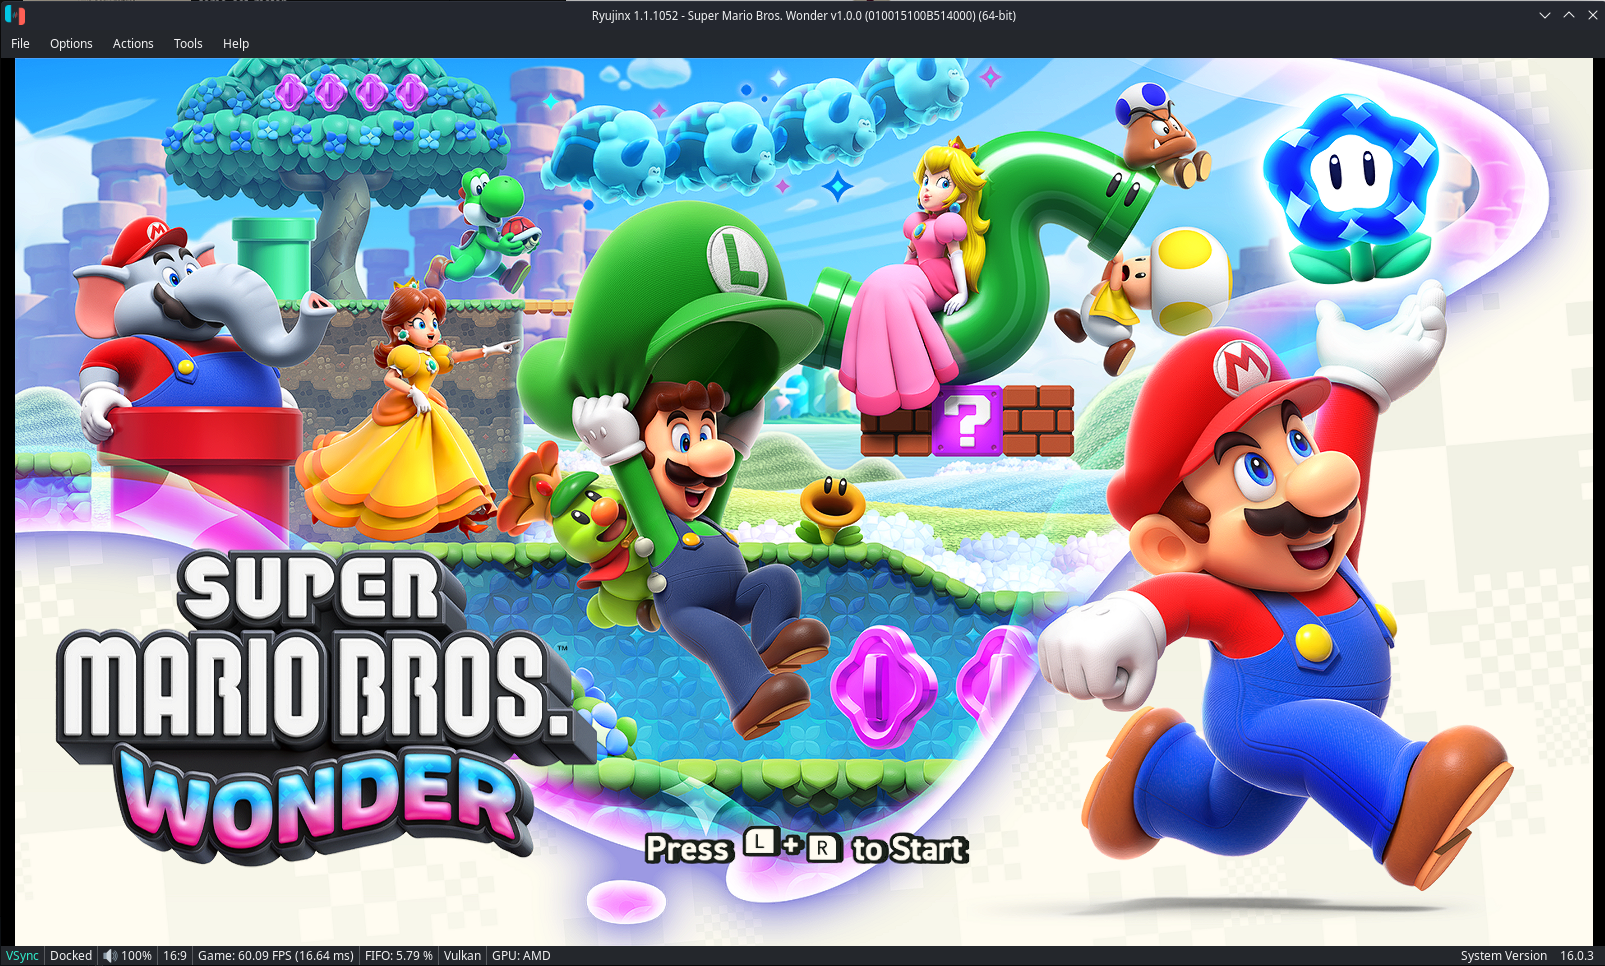 Super Mario Wonder is already playable on PC in 4K/60fps via Nintendo Switch  emulators : r/pcgaming